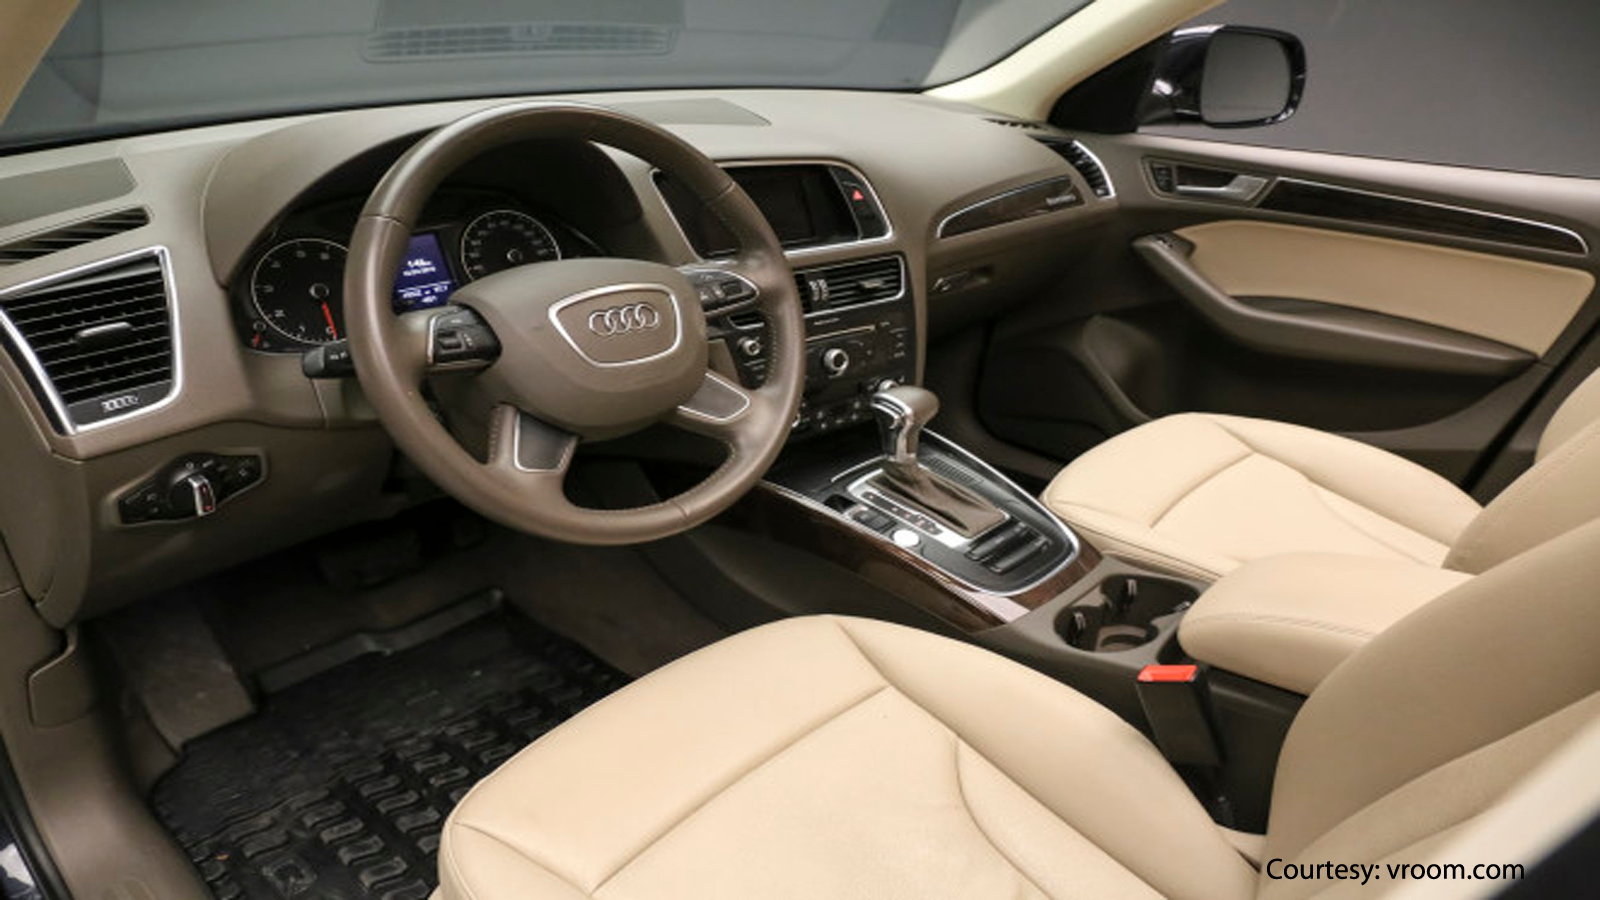 Audi Q5 S Line 2011 In depth Tour Interior Exterior (FOR SALE) - YouTube